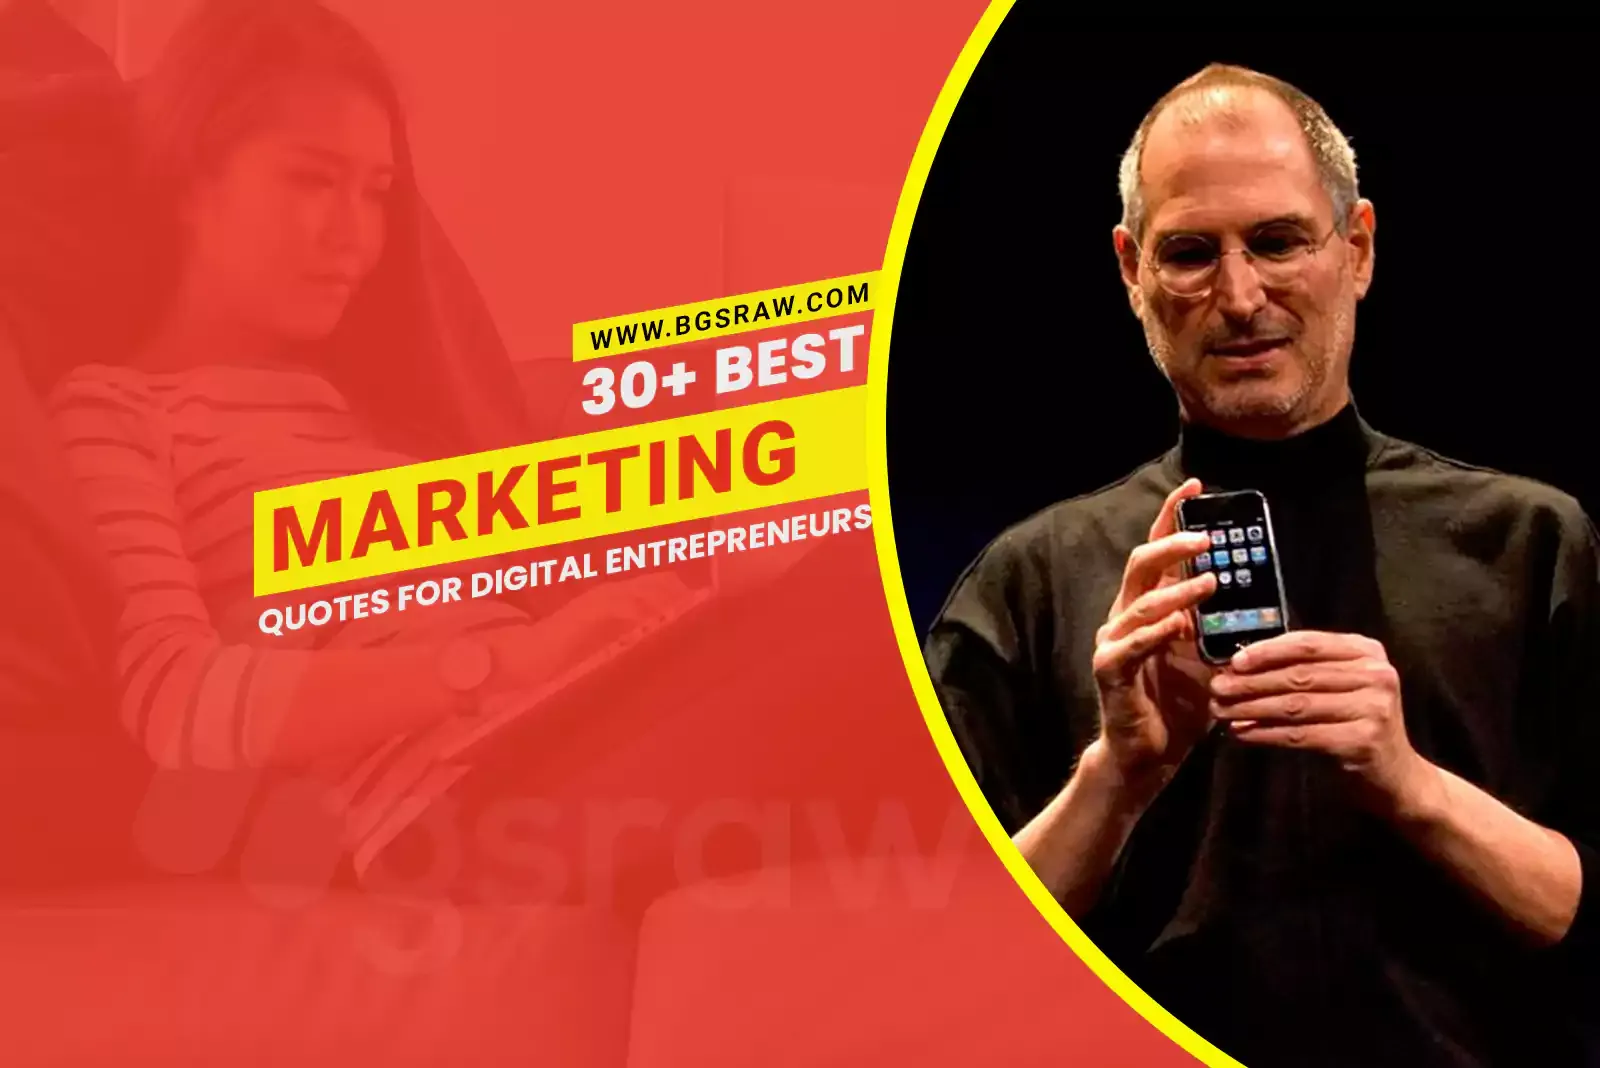 30+ Best Marketing Quotes for Digital Entrepreneurs